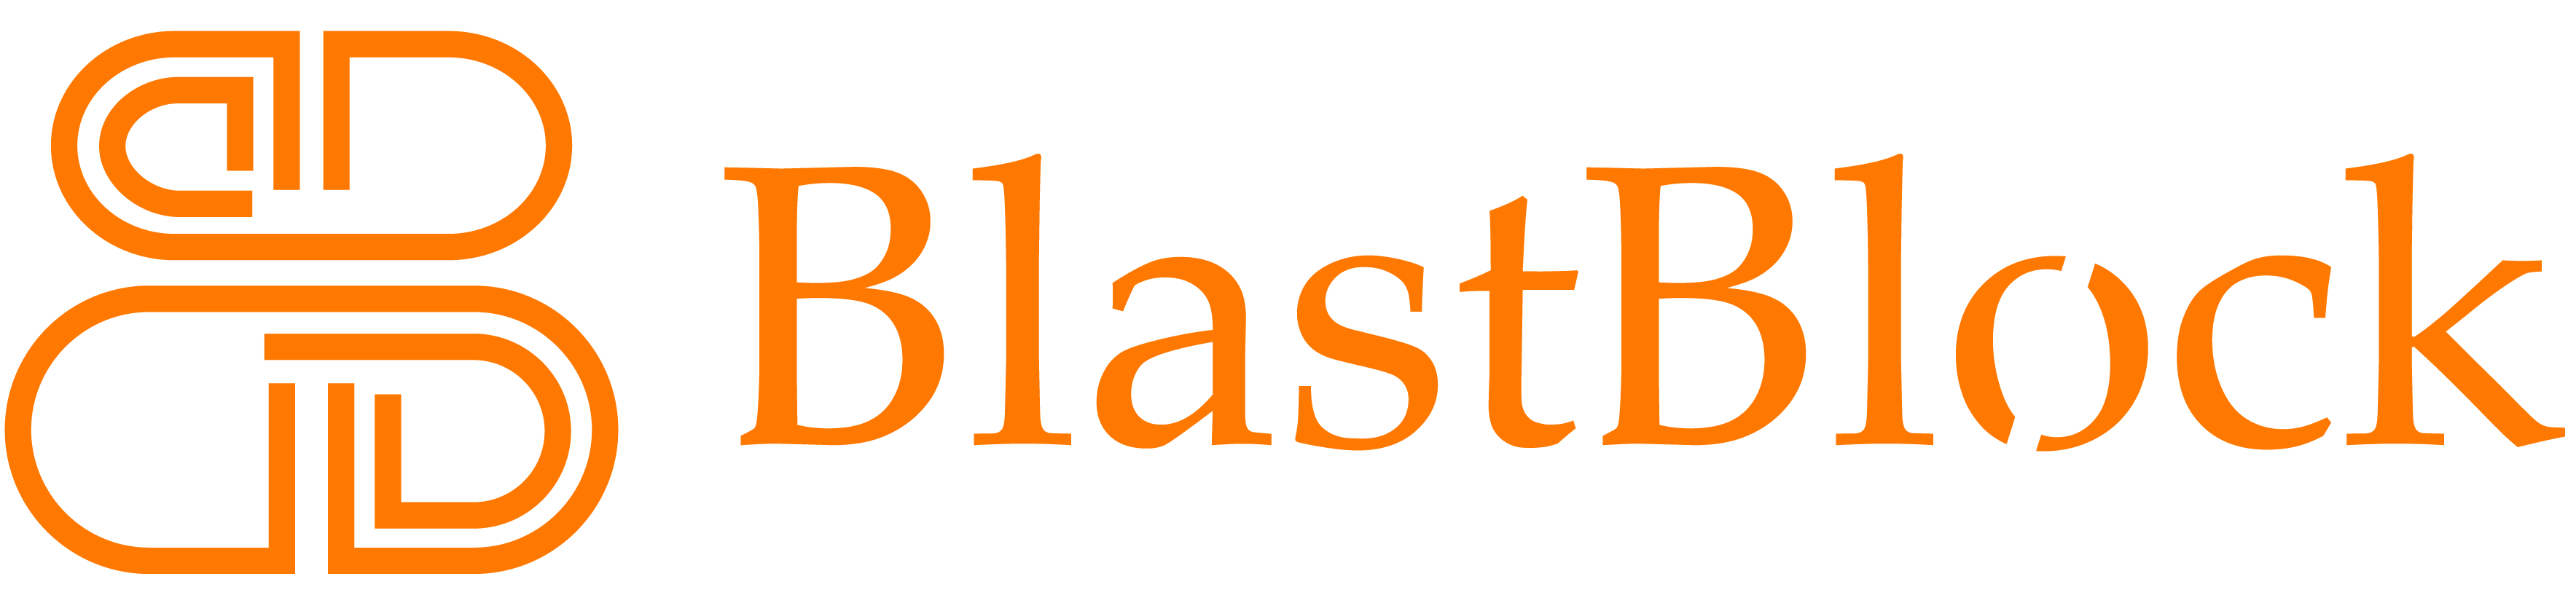 blastblock-logo-final.png